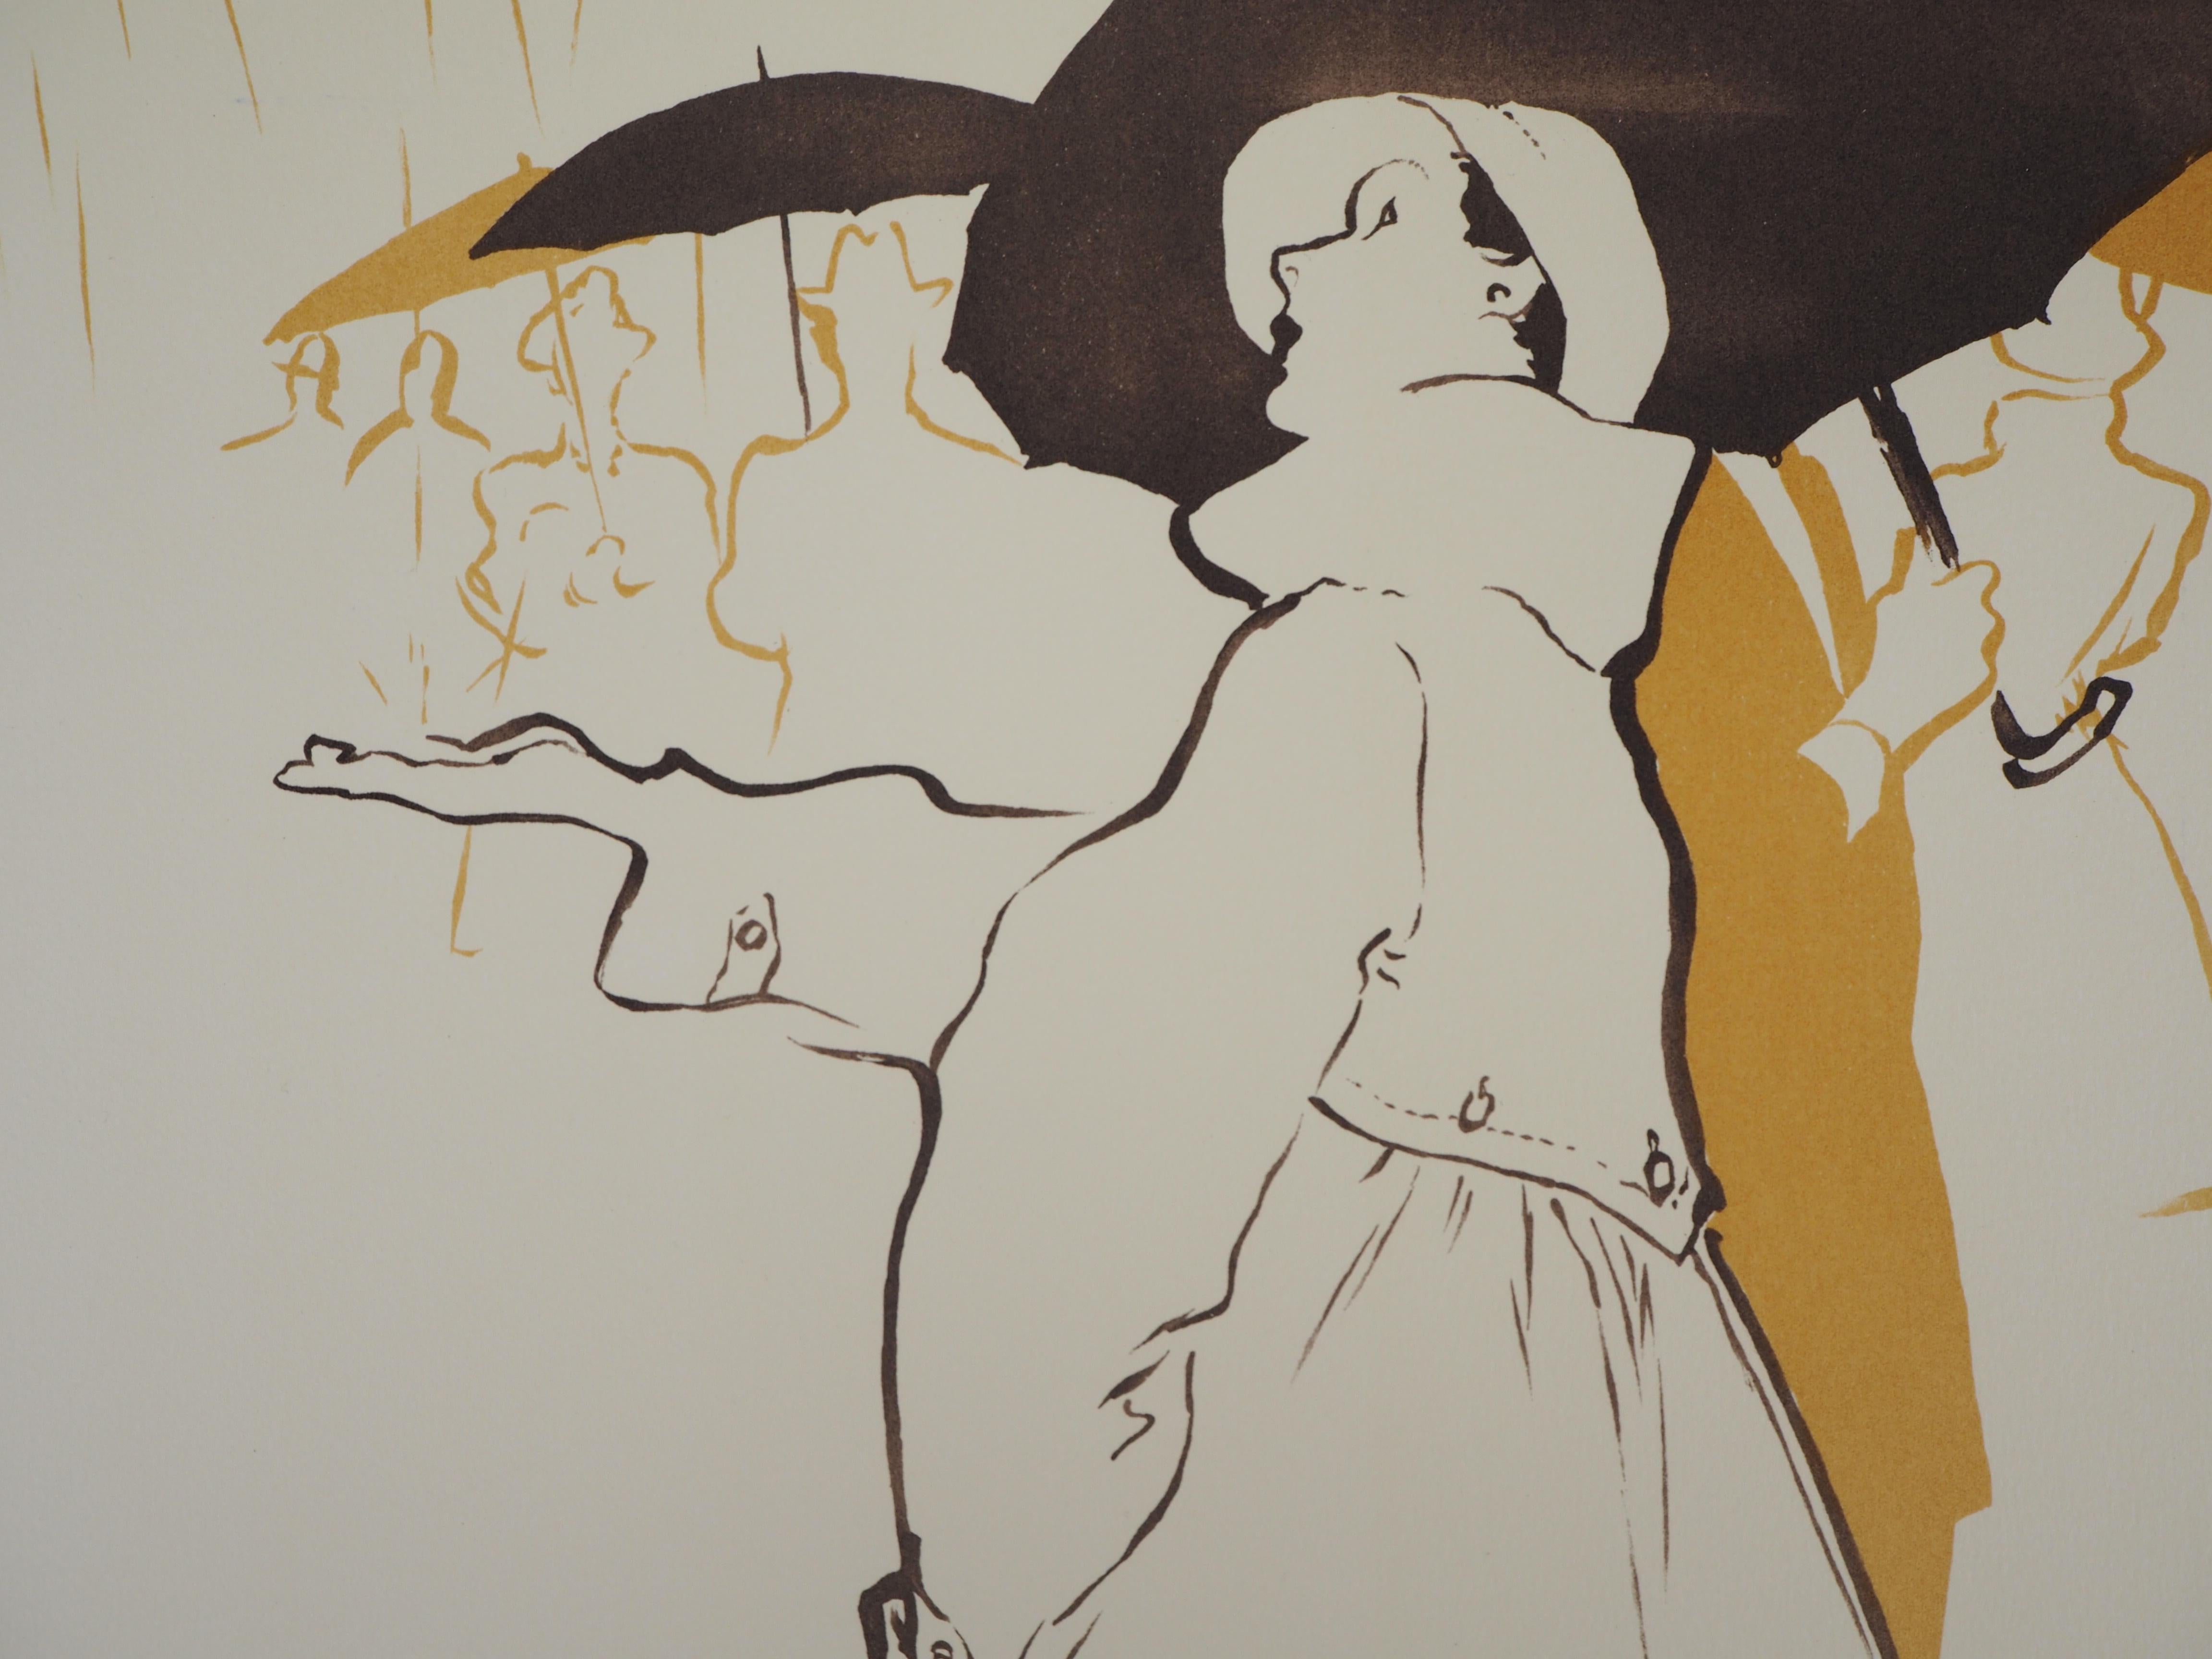 Rainy Day : Woman with Umbrella - Original Lithograph, Handsigned - Gray Figurative Print by René Gruau